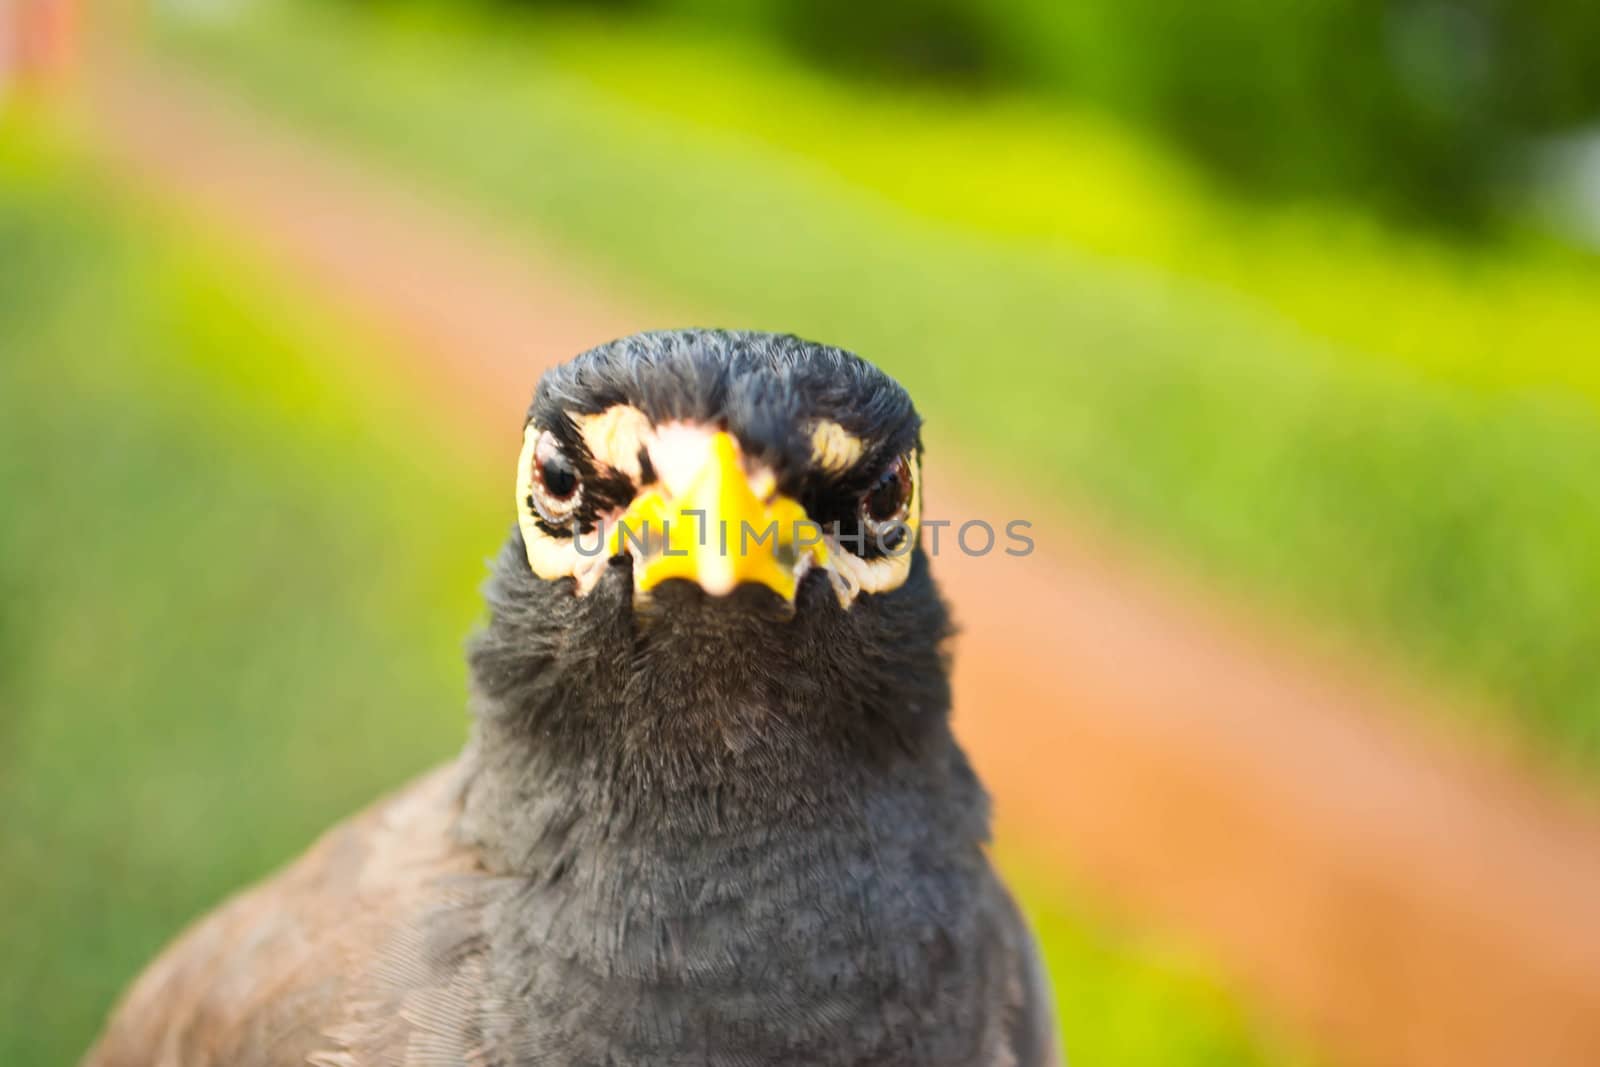 Starlings bird by Thanamat